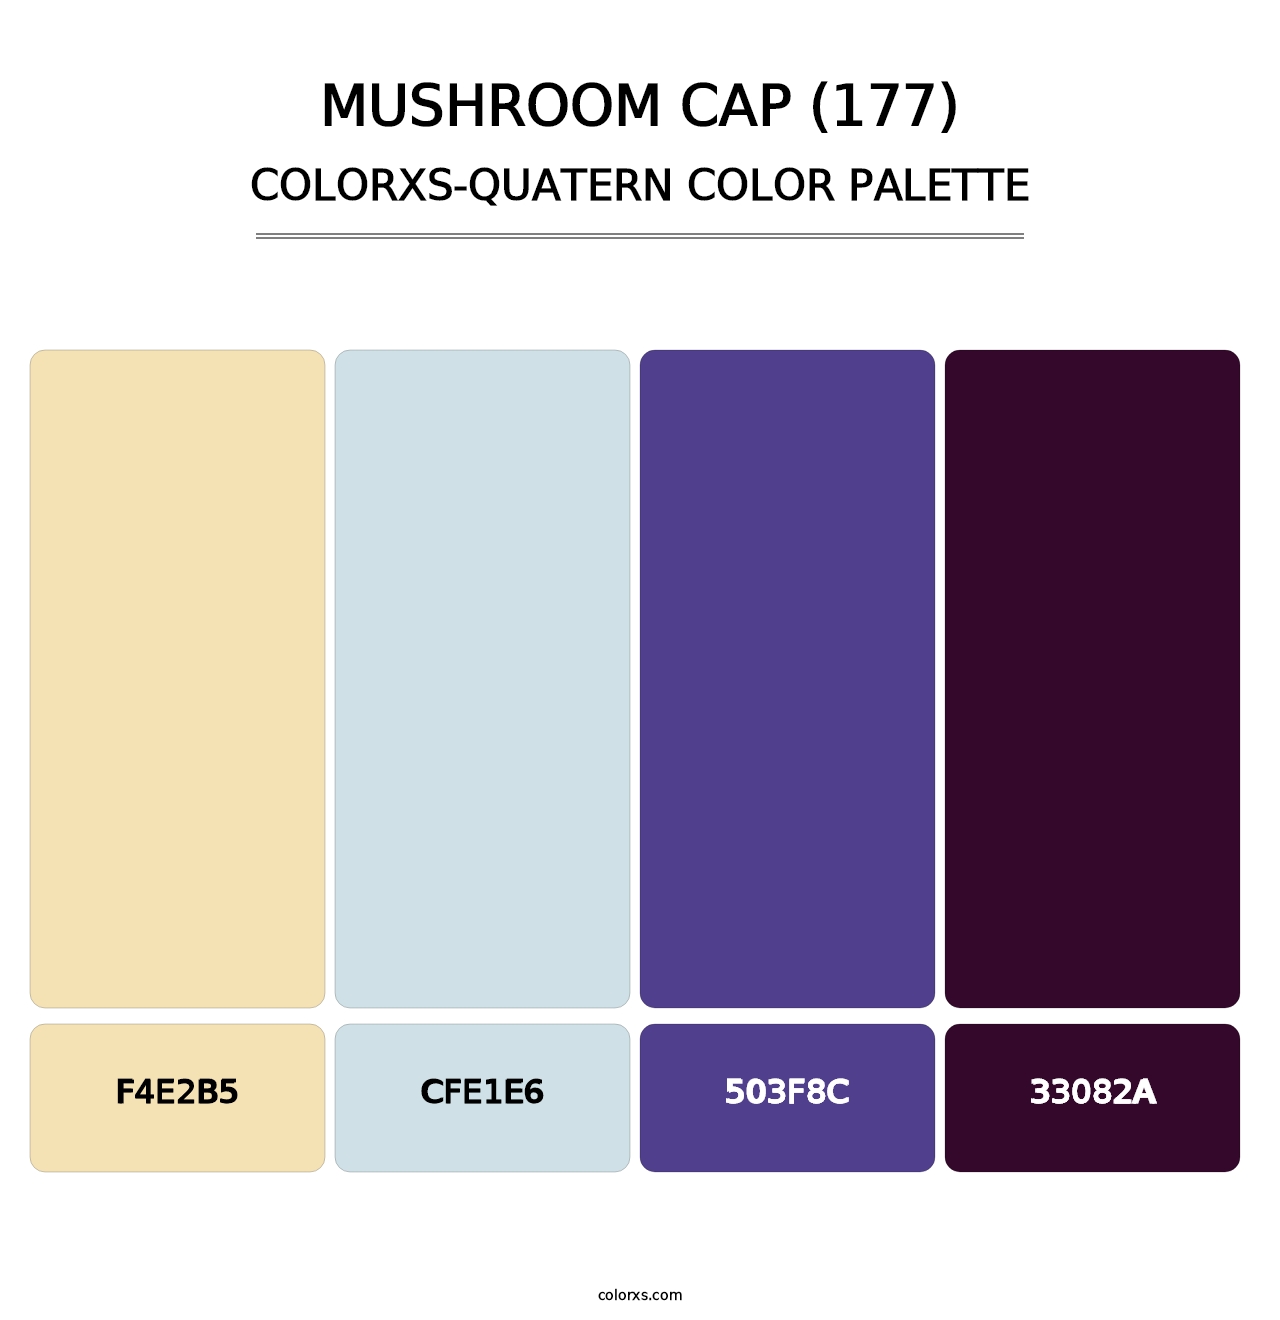 Mushroom Cap (177) - Colorxs Quatern Palette